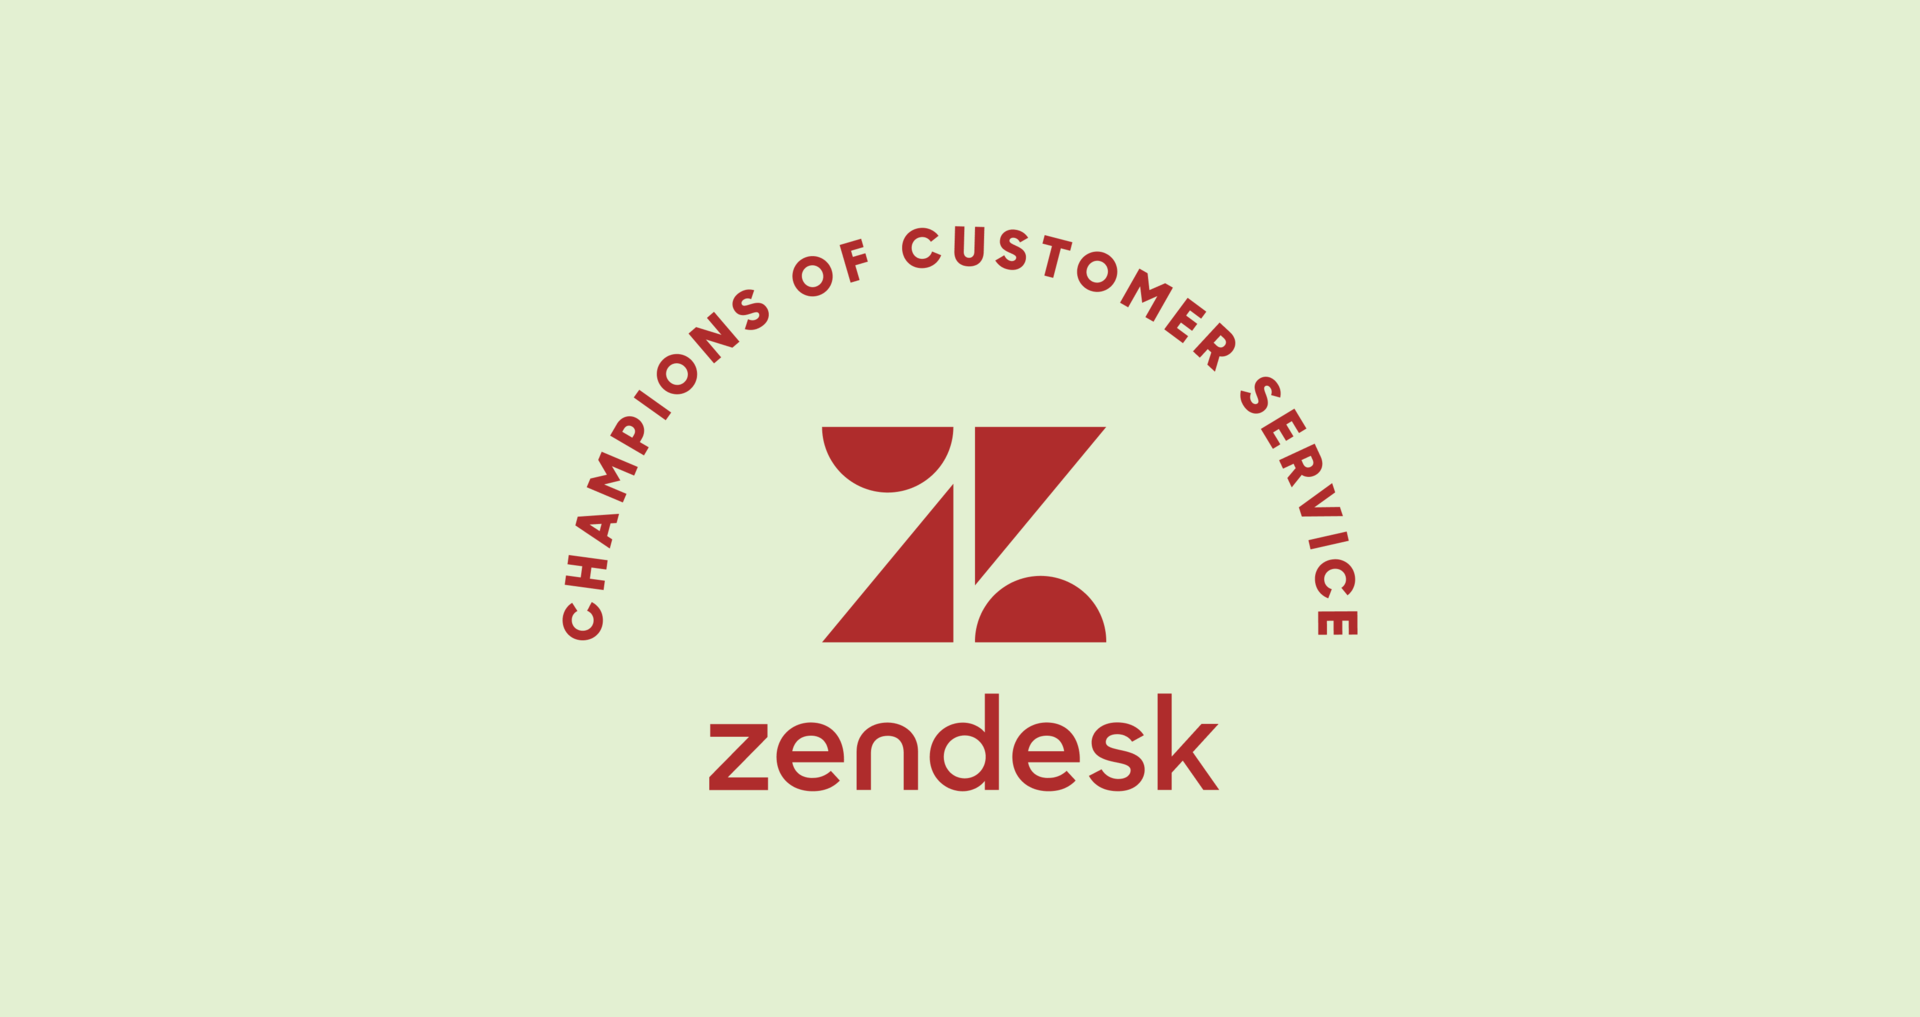 Zendesk | We build softwares to make customer service better website picture